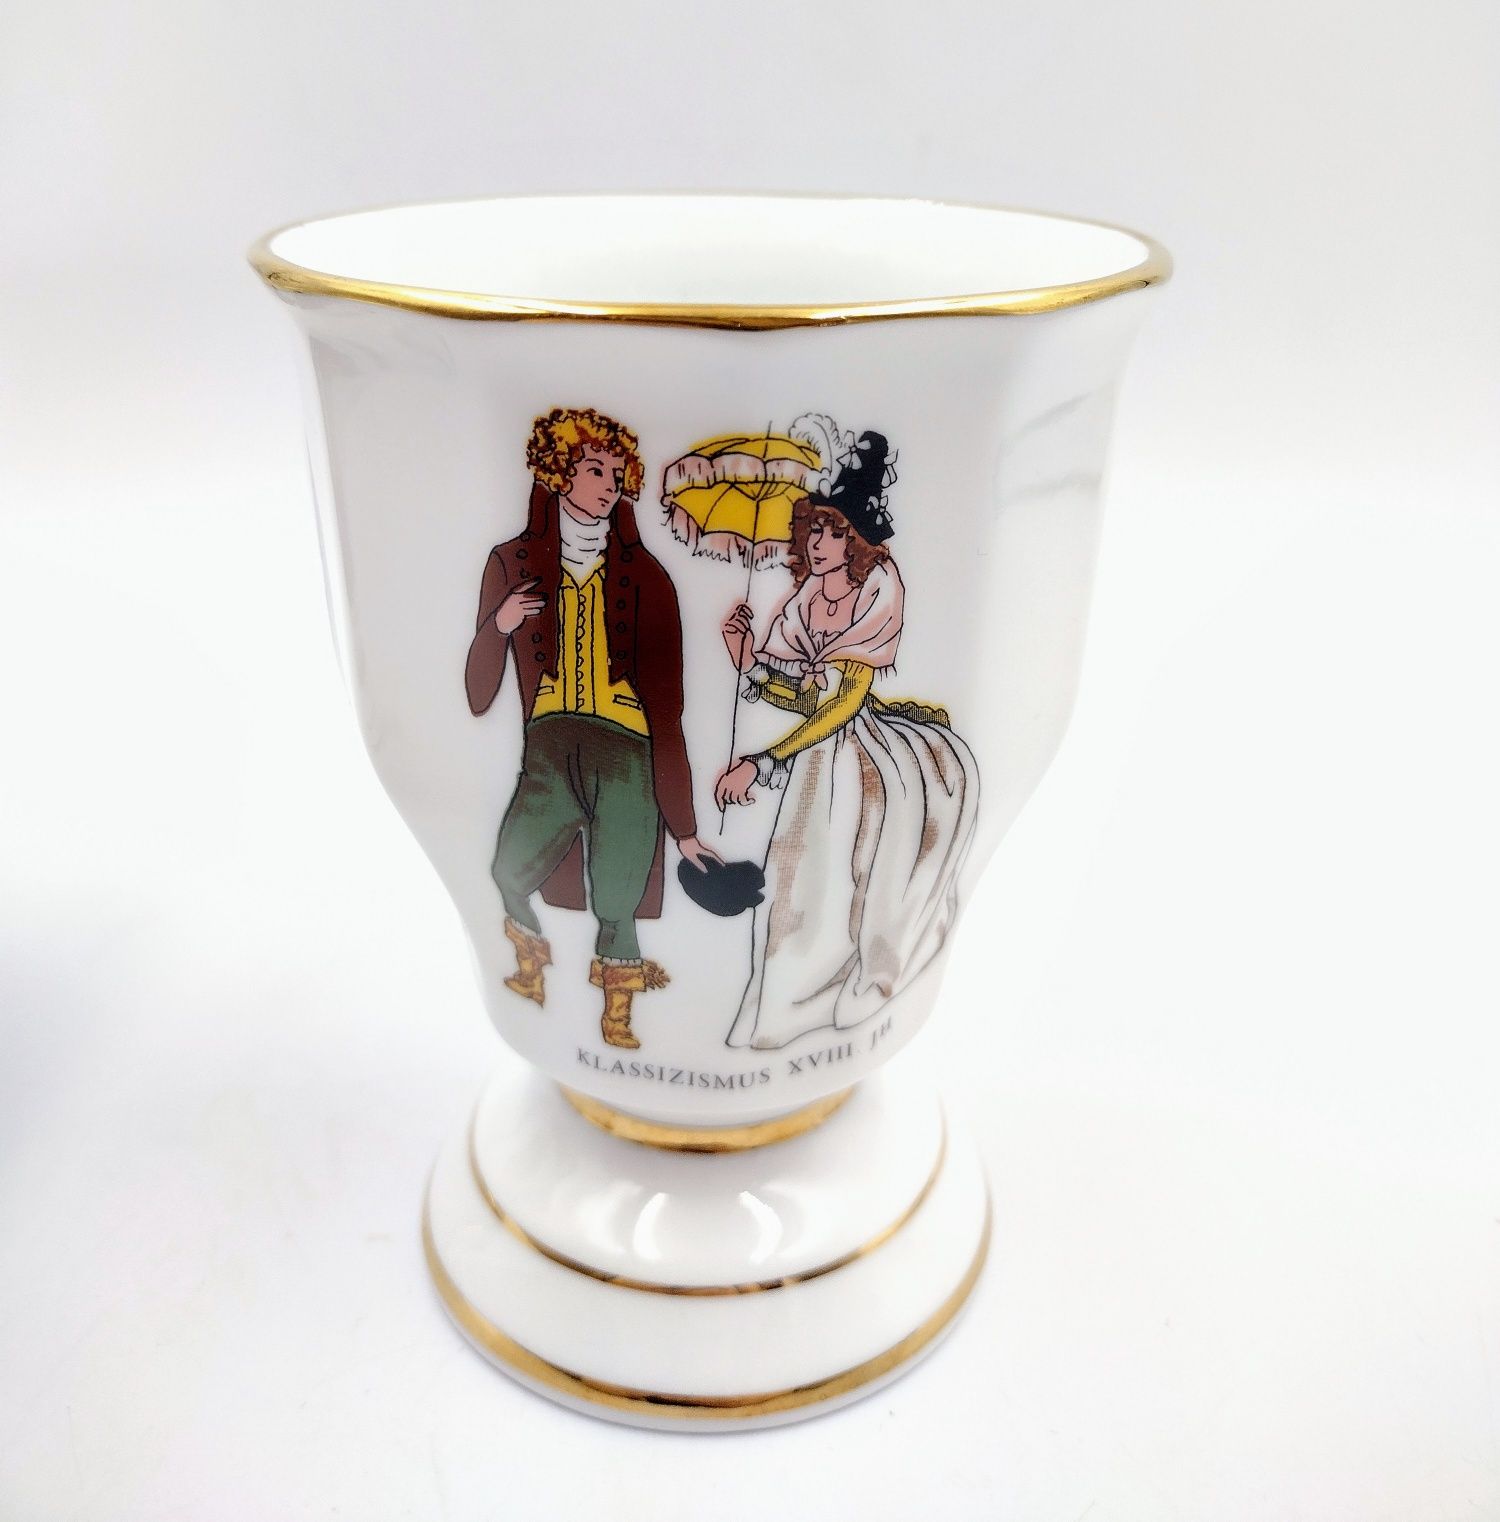 Puchary goblety kufel porcelanowy historyzm stroje epokowe antyk retro